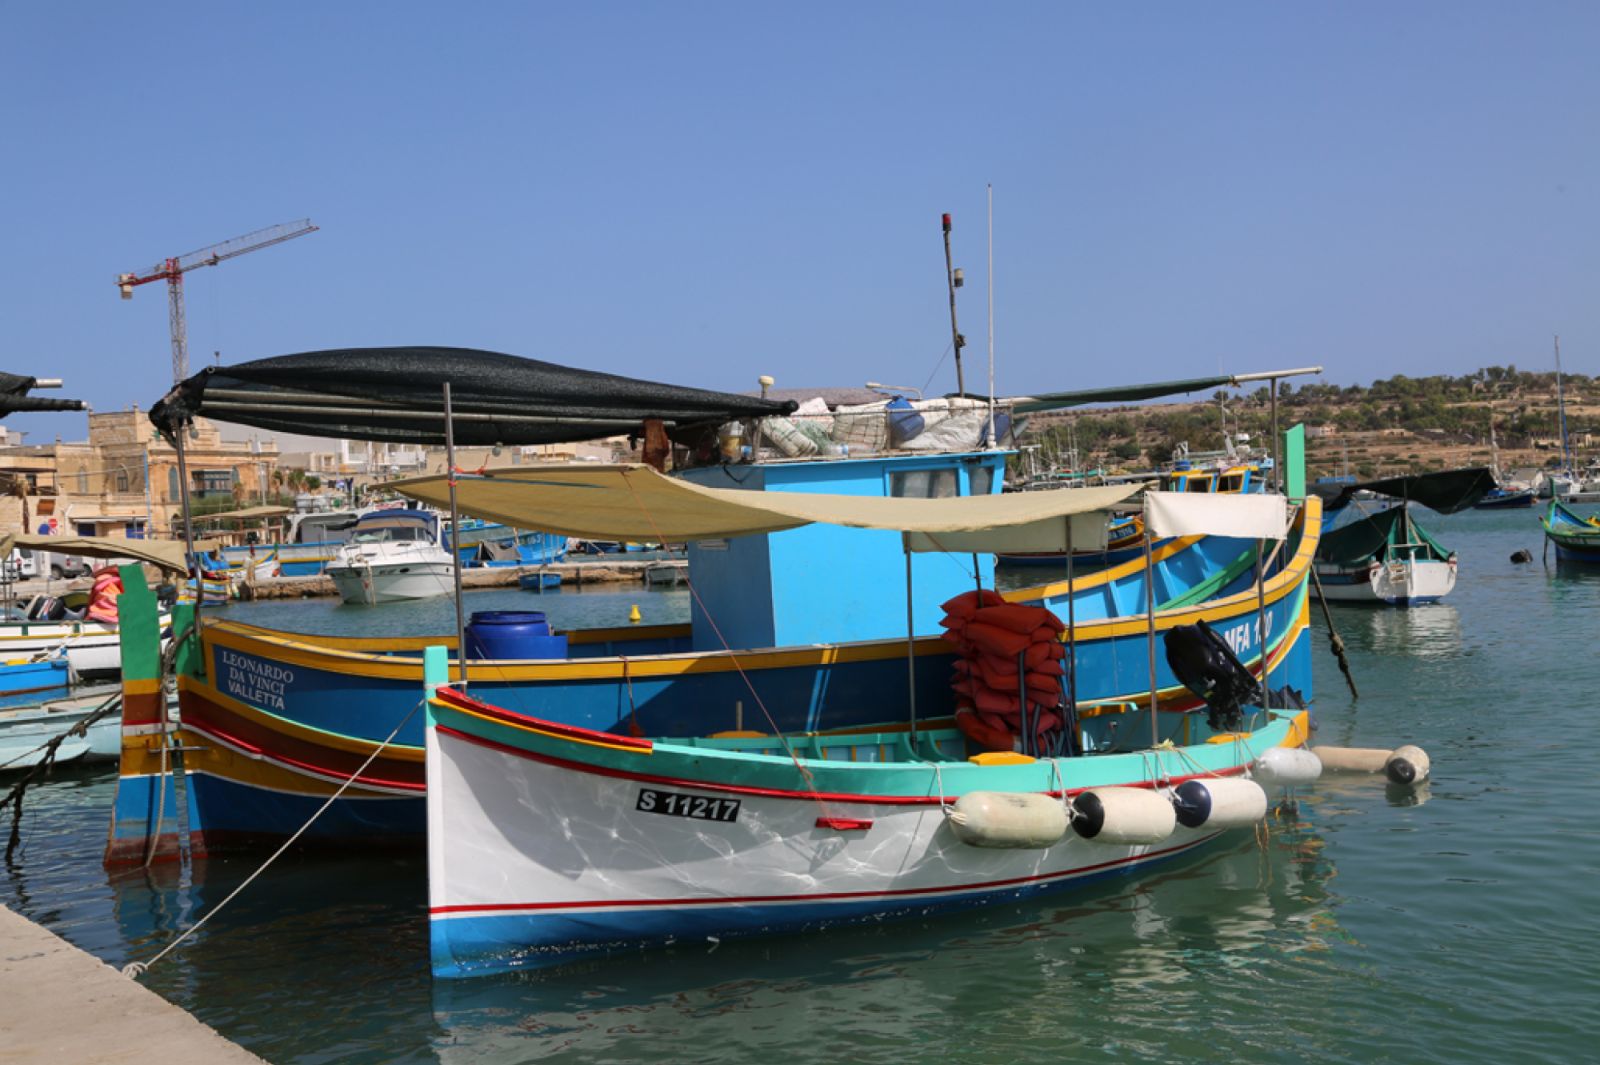 Small traditional Maltese boats